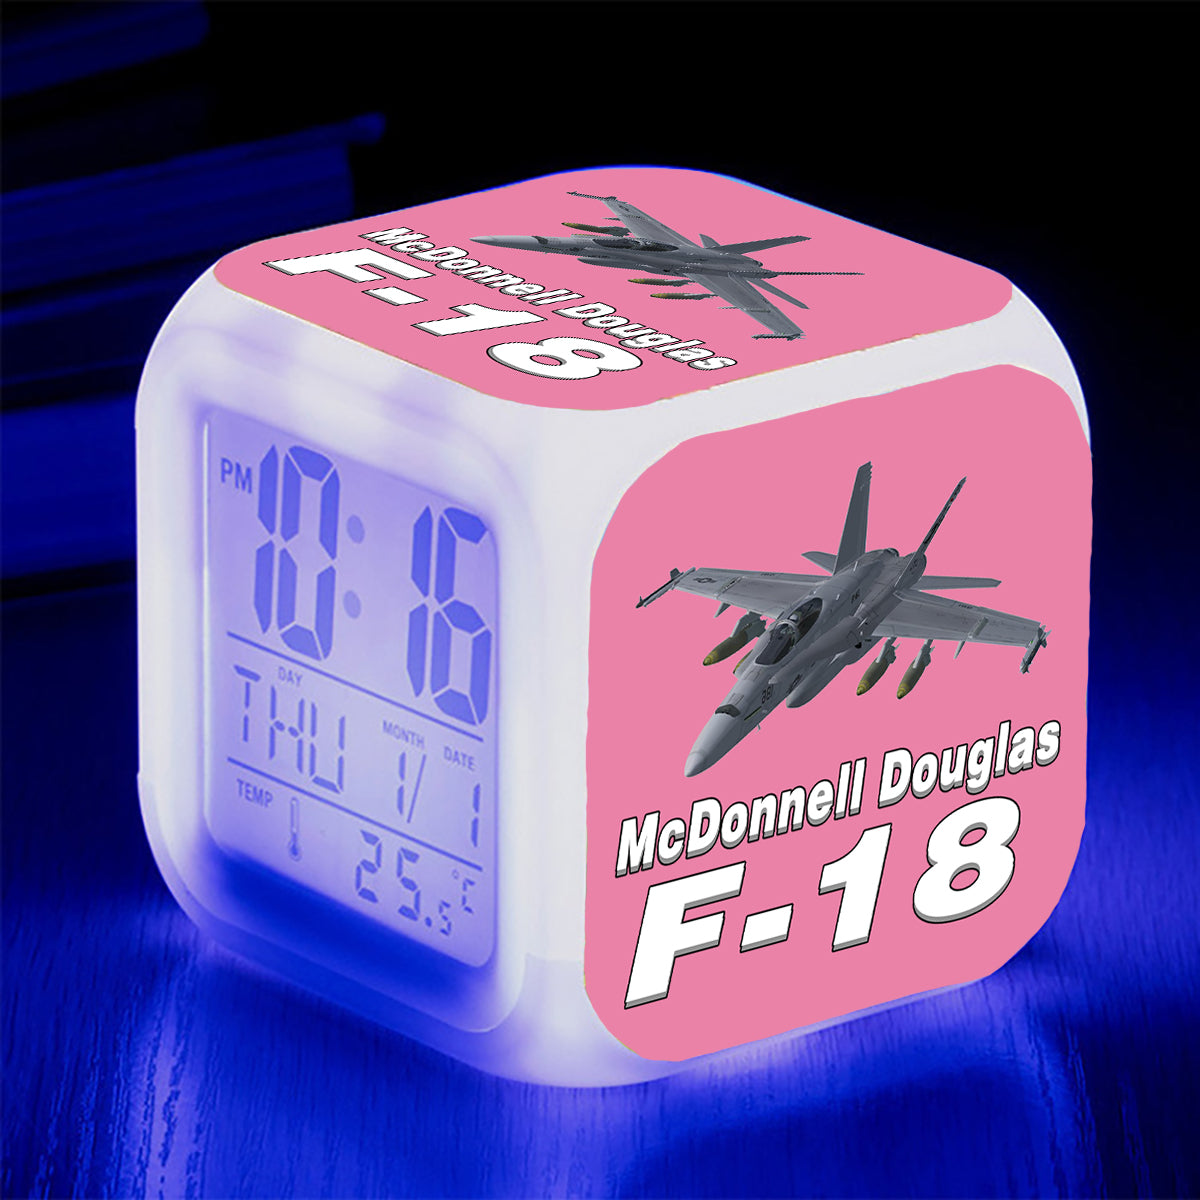 The McDonnell Douglas F18 Designed "7 Colour" Digital Alarm Clock